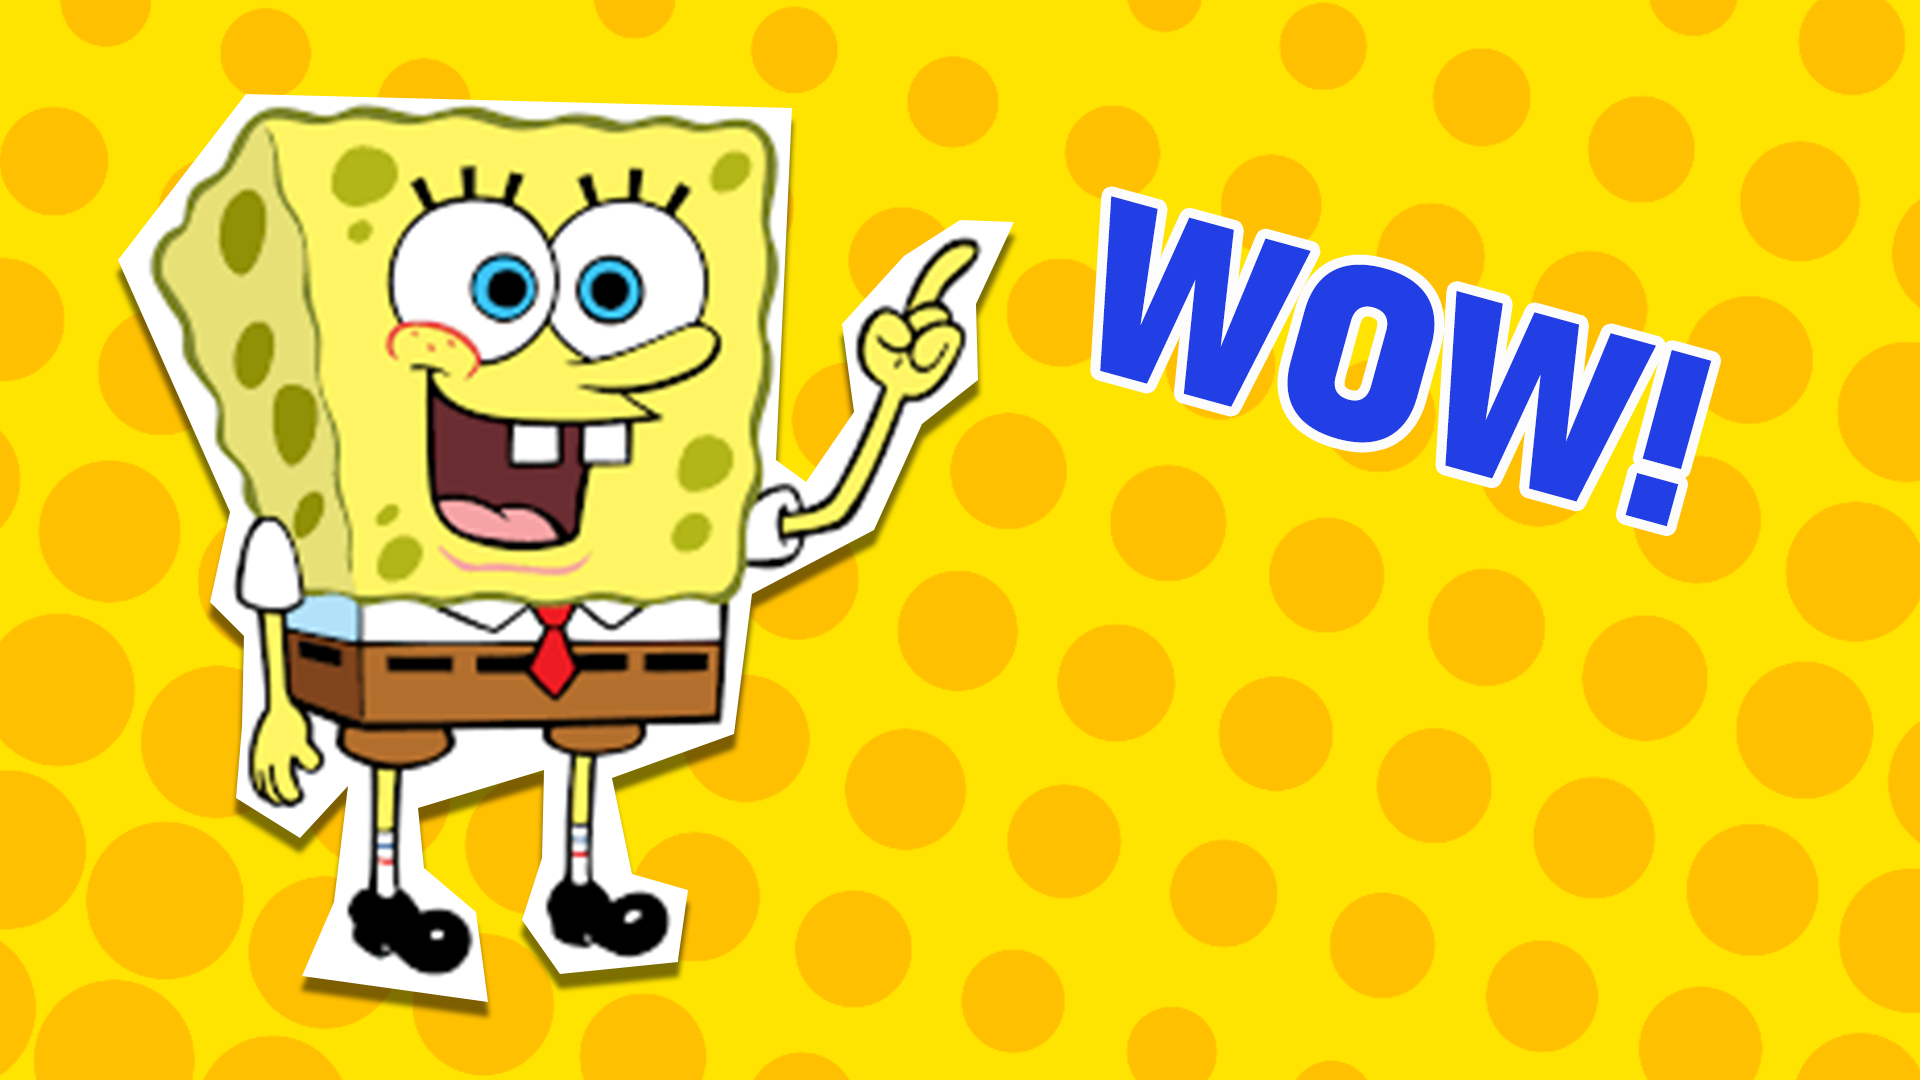 Woah! Incredible! You got 100% right on this epic Kamp Koral quiz! SpongeBob would be proud!